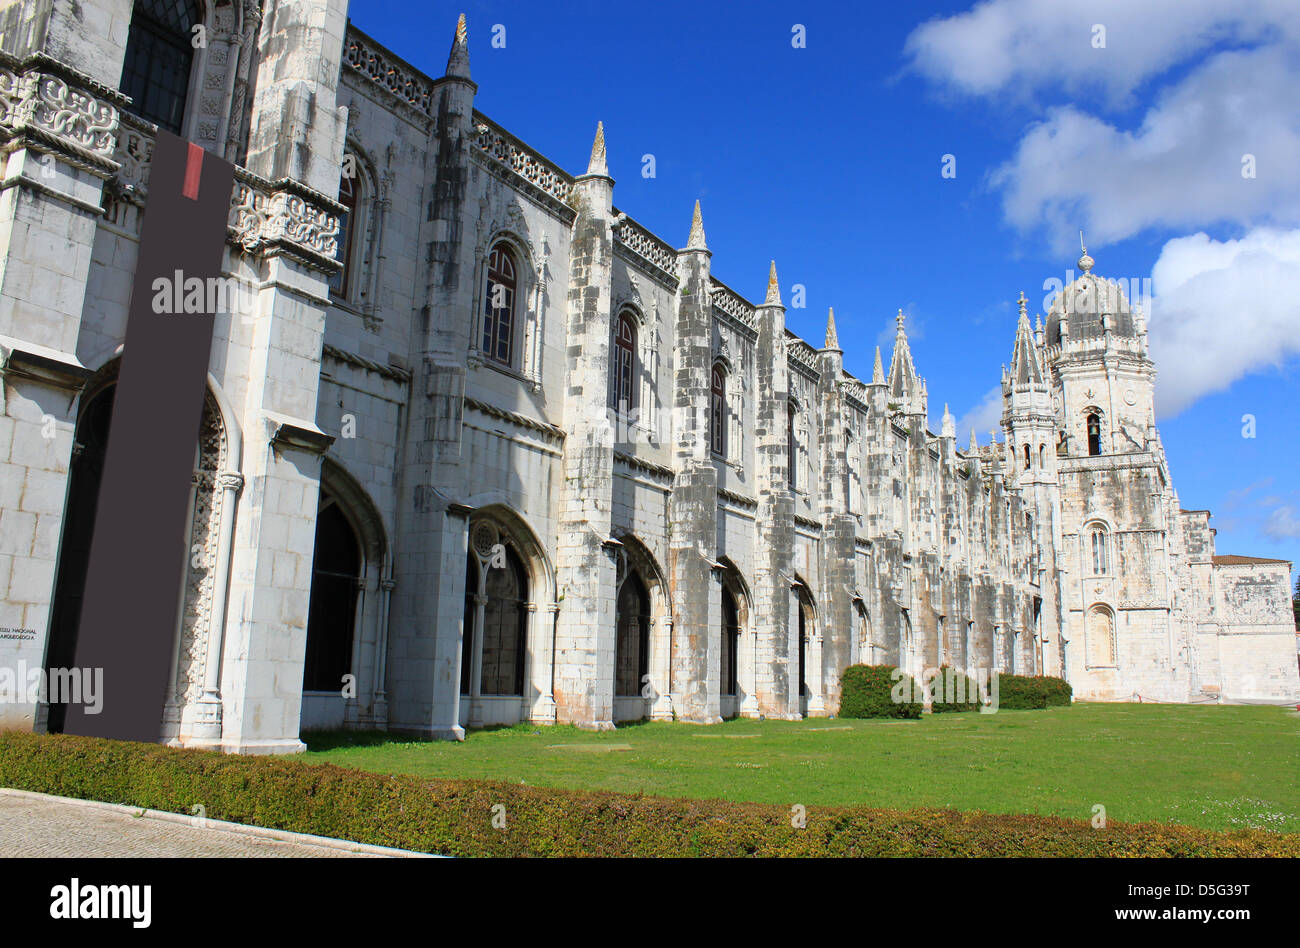 Jeronimos monastery ( Mosteiro dos Jeronimos) in Belem, Lisbon, Portugal showing Manueline architecture Stock Photo